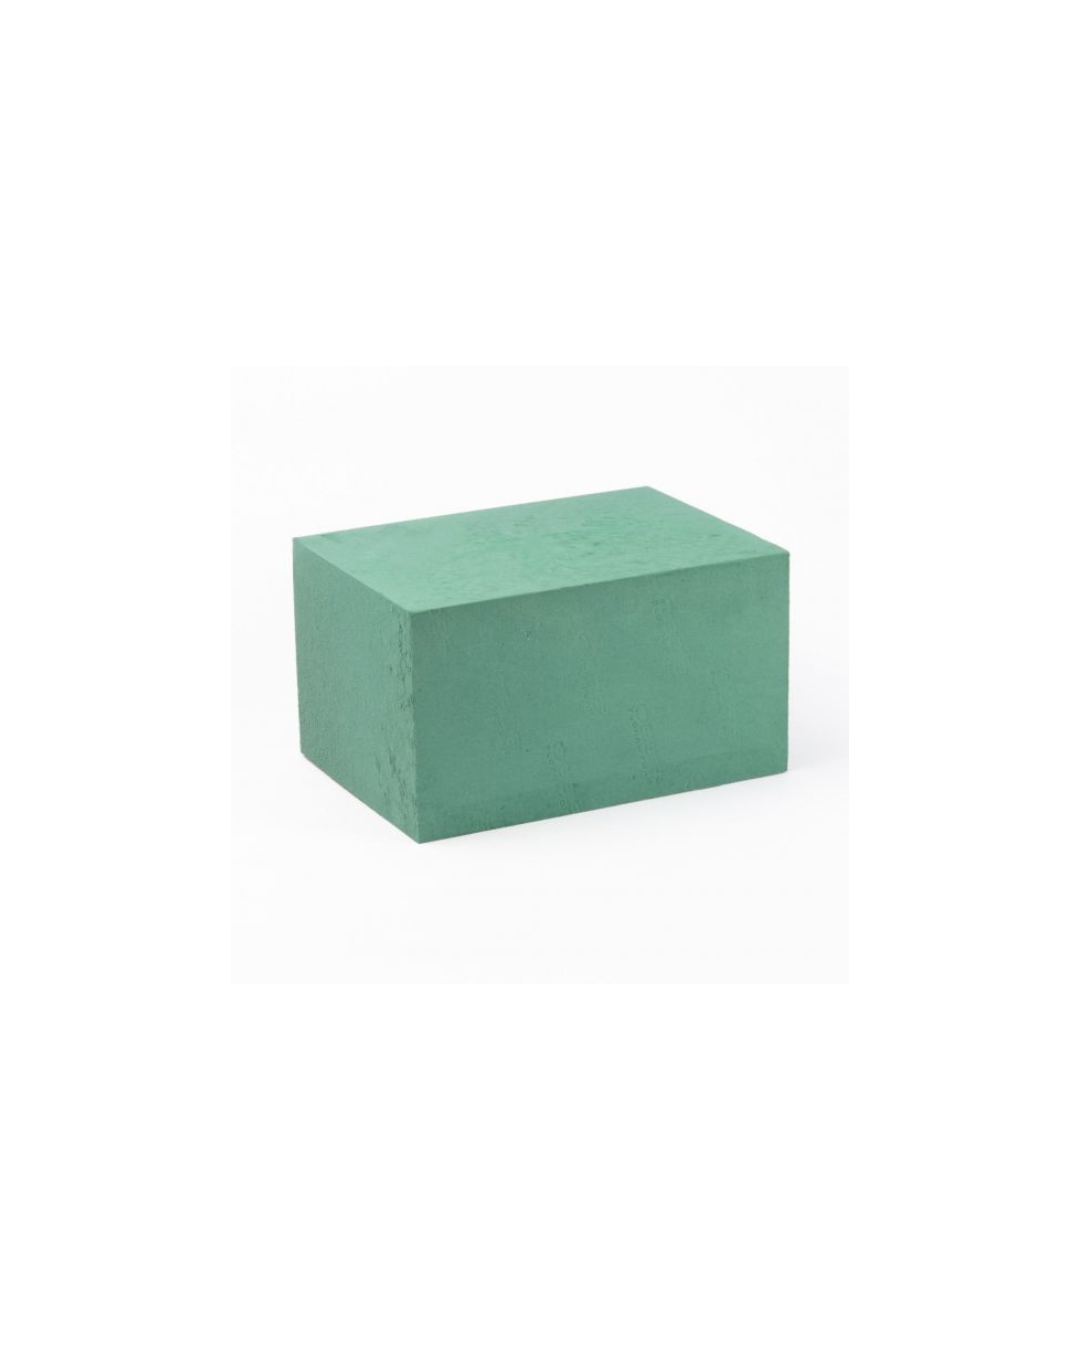 Wet Foam Box of 3 Bricks